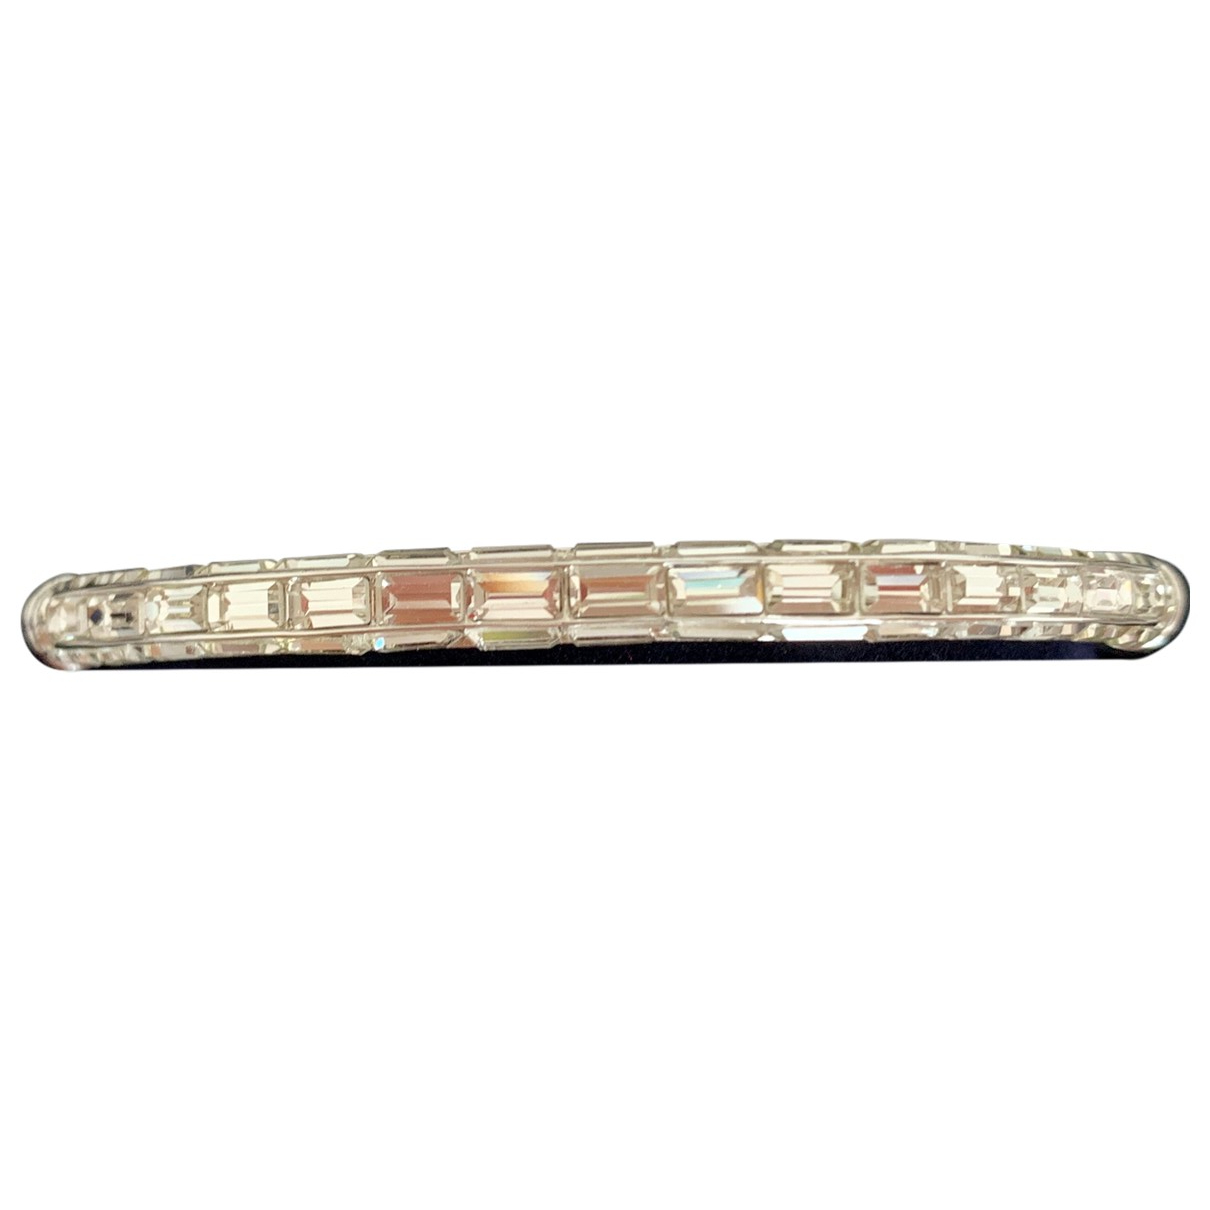 jewellery Swarovski bracelets for Female Silver. Used condition